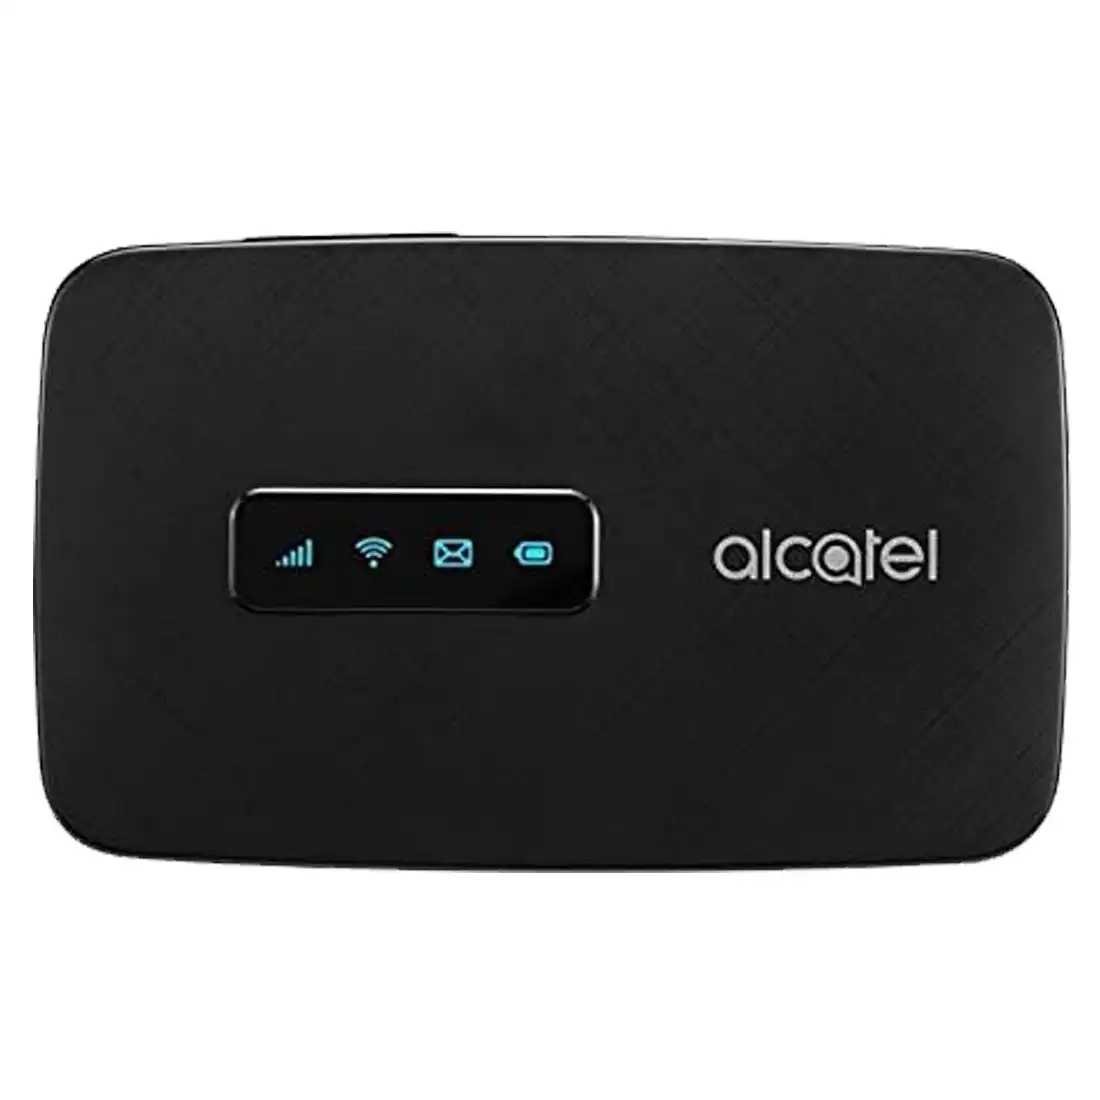 Alcatel Link Zone 4G Mobile WiFi Unlocked - Black